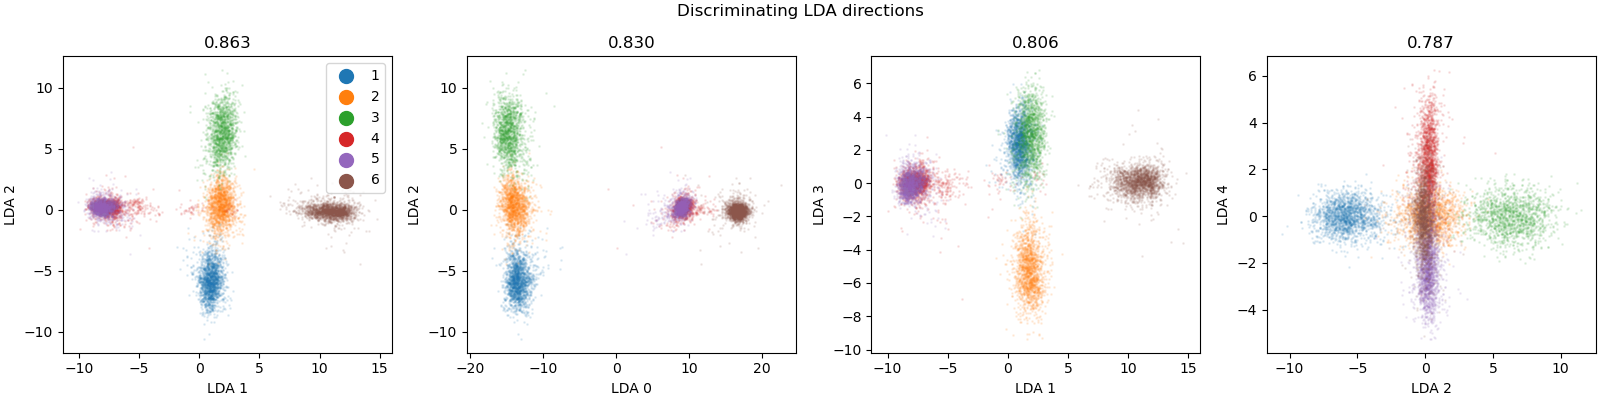 Discriminating LDA directions, 0.863, 0.830, 0.806, 0.787